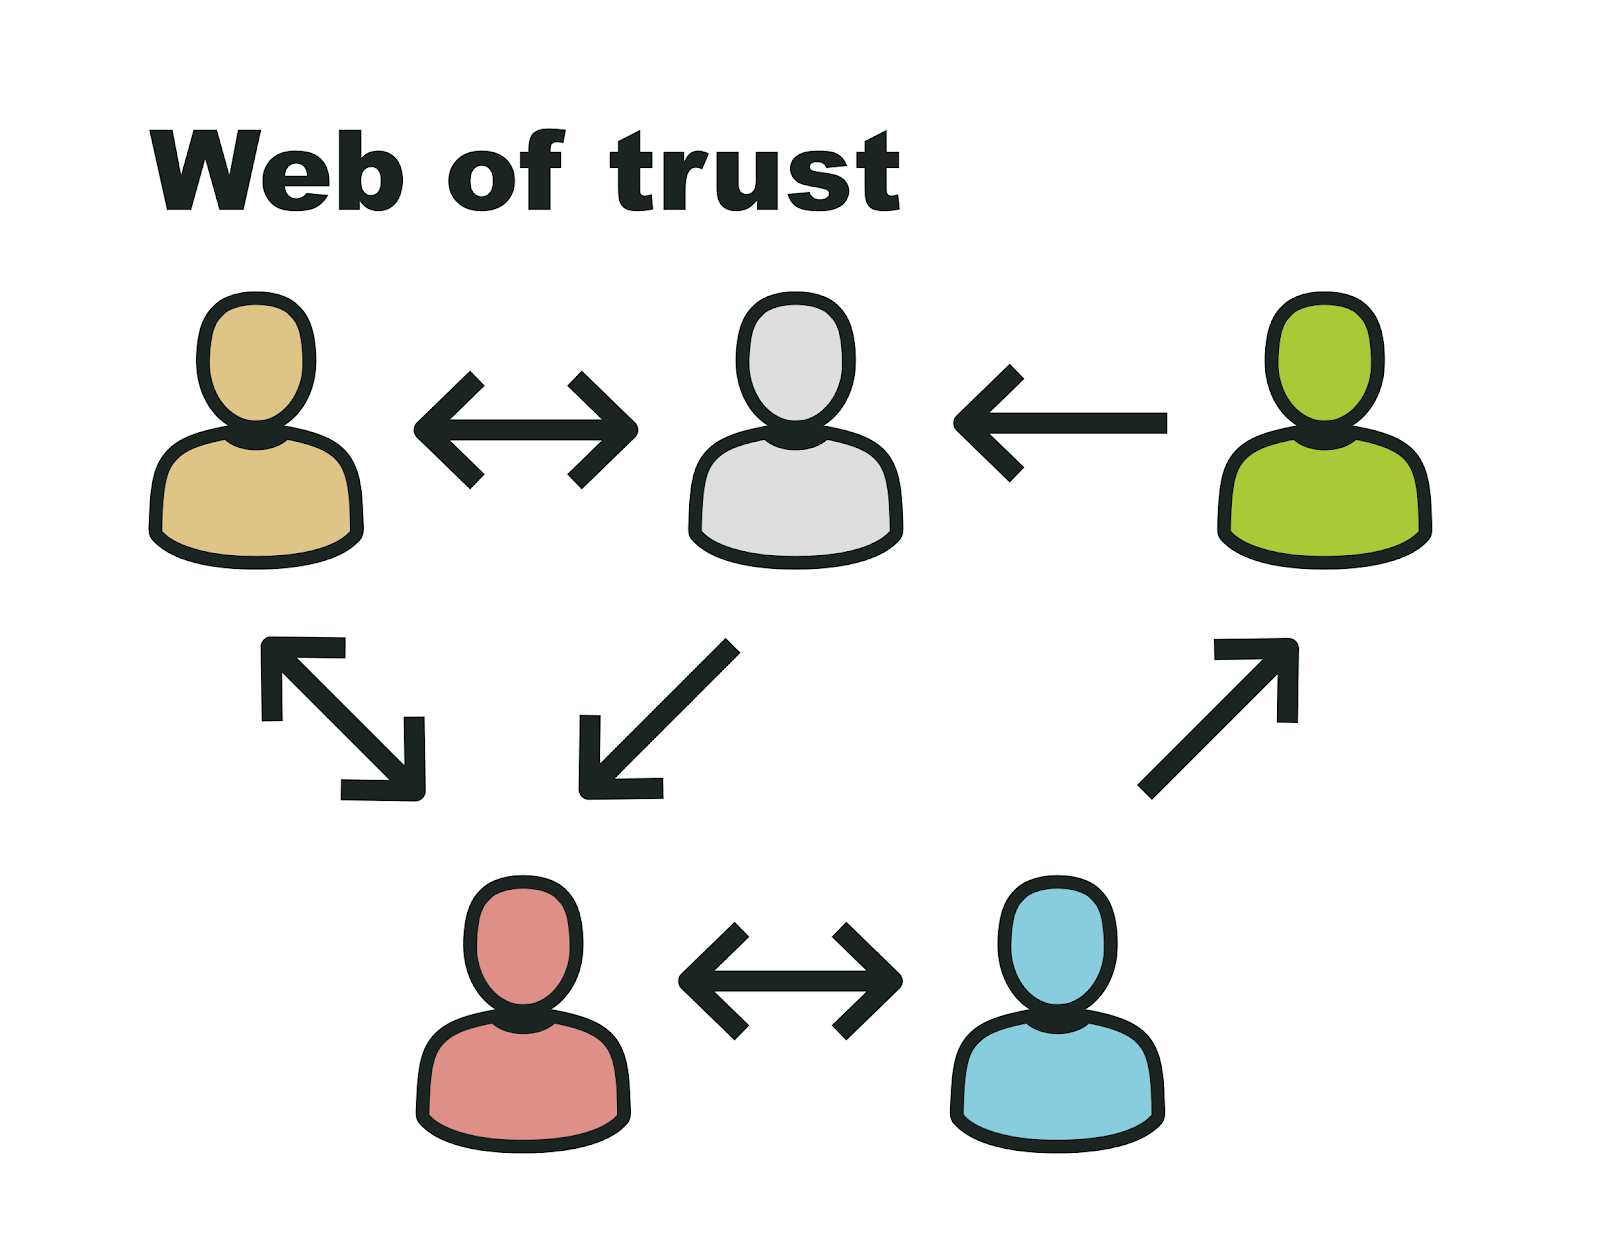 Web of trust